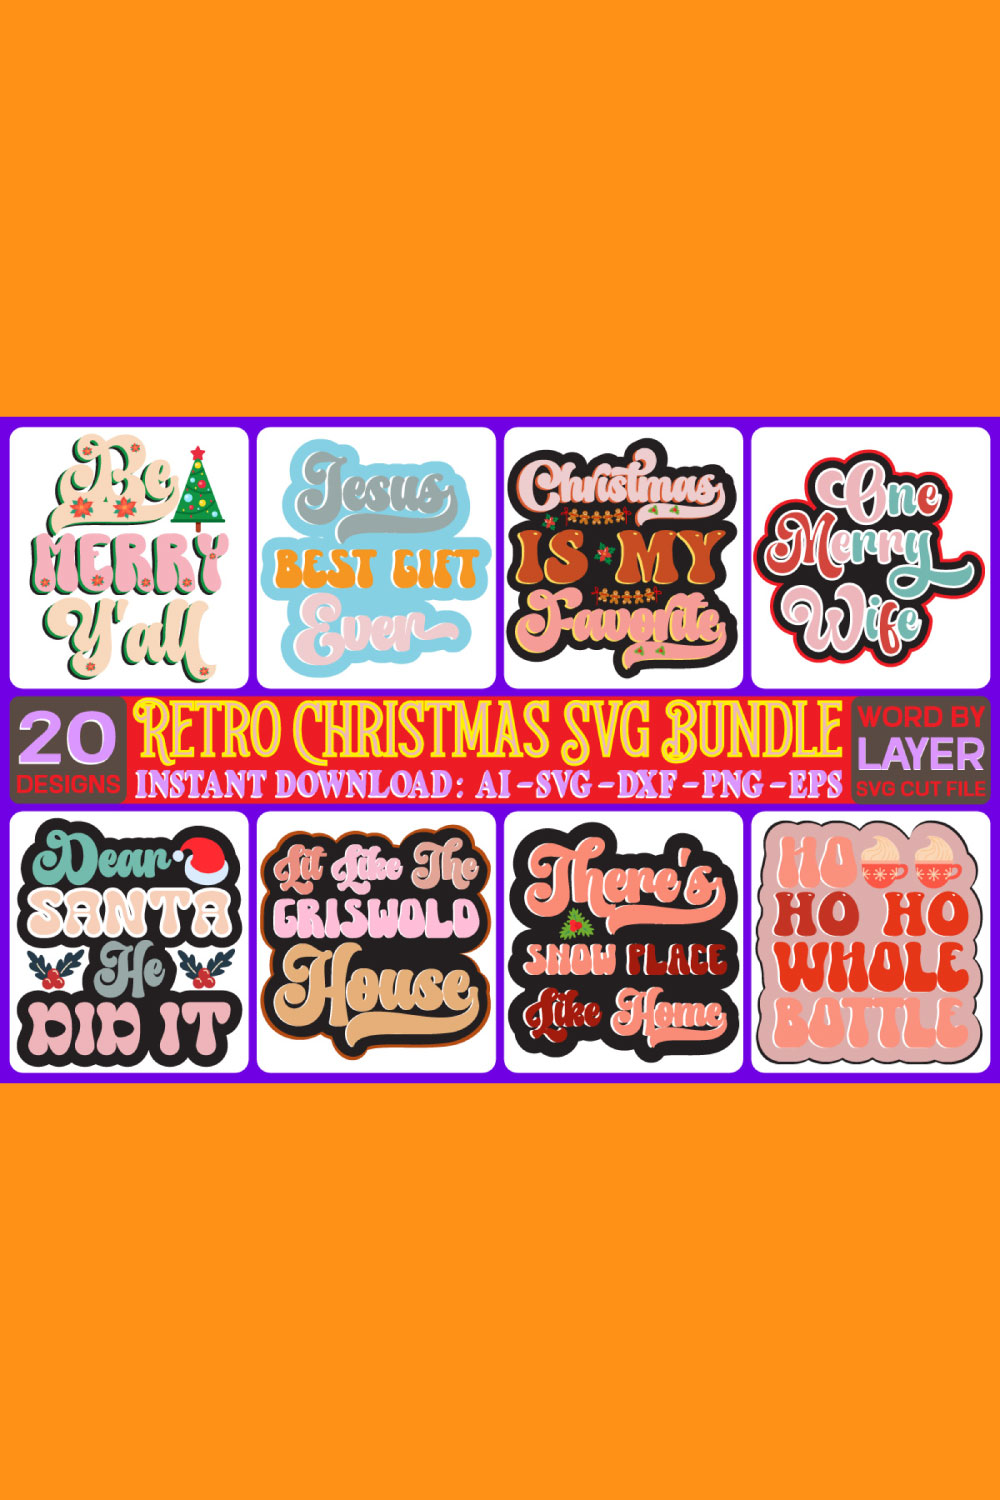 Christmas SVG Retro Design Bundle pinterest image.